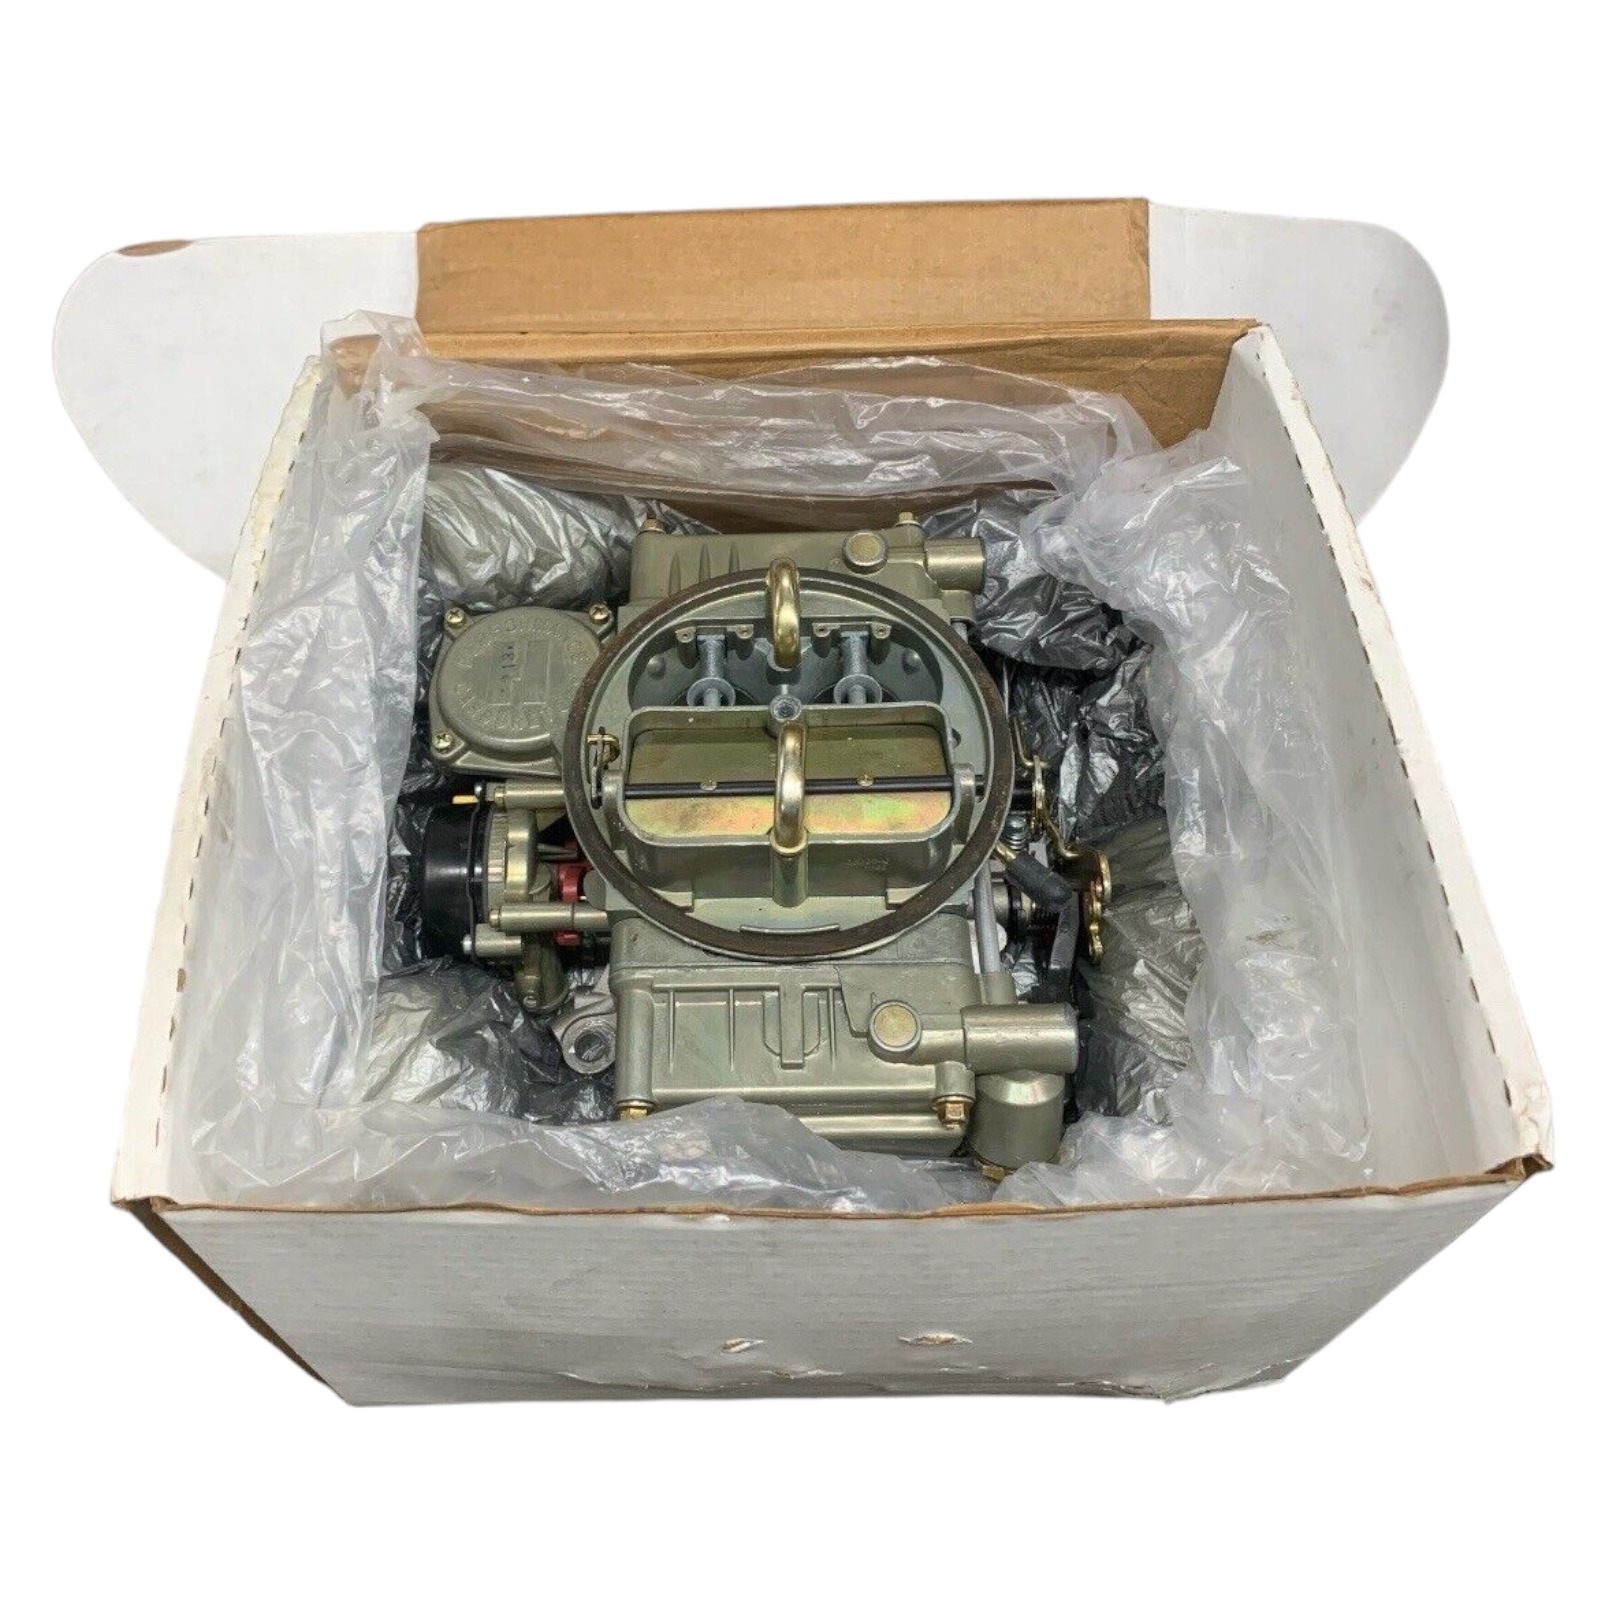 Holley 4160 Marine Carburetor 600 CFM Ford 351 & GM 350 RA052003